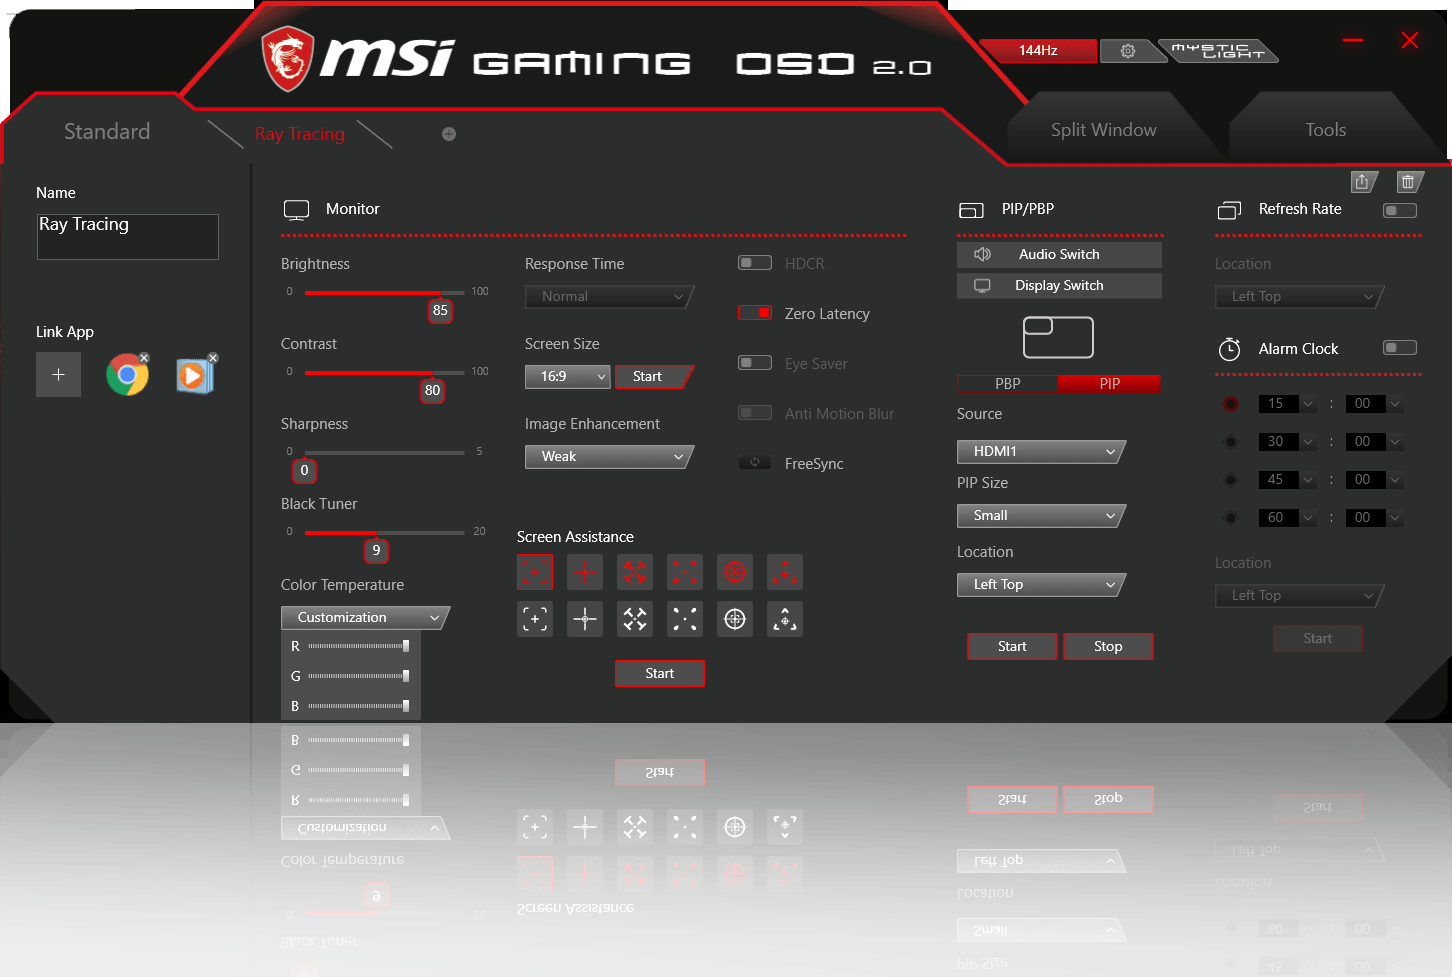 screenshot of gaming OSD